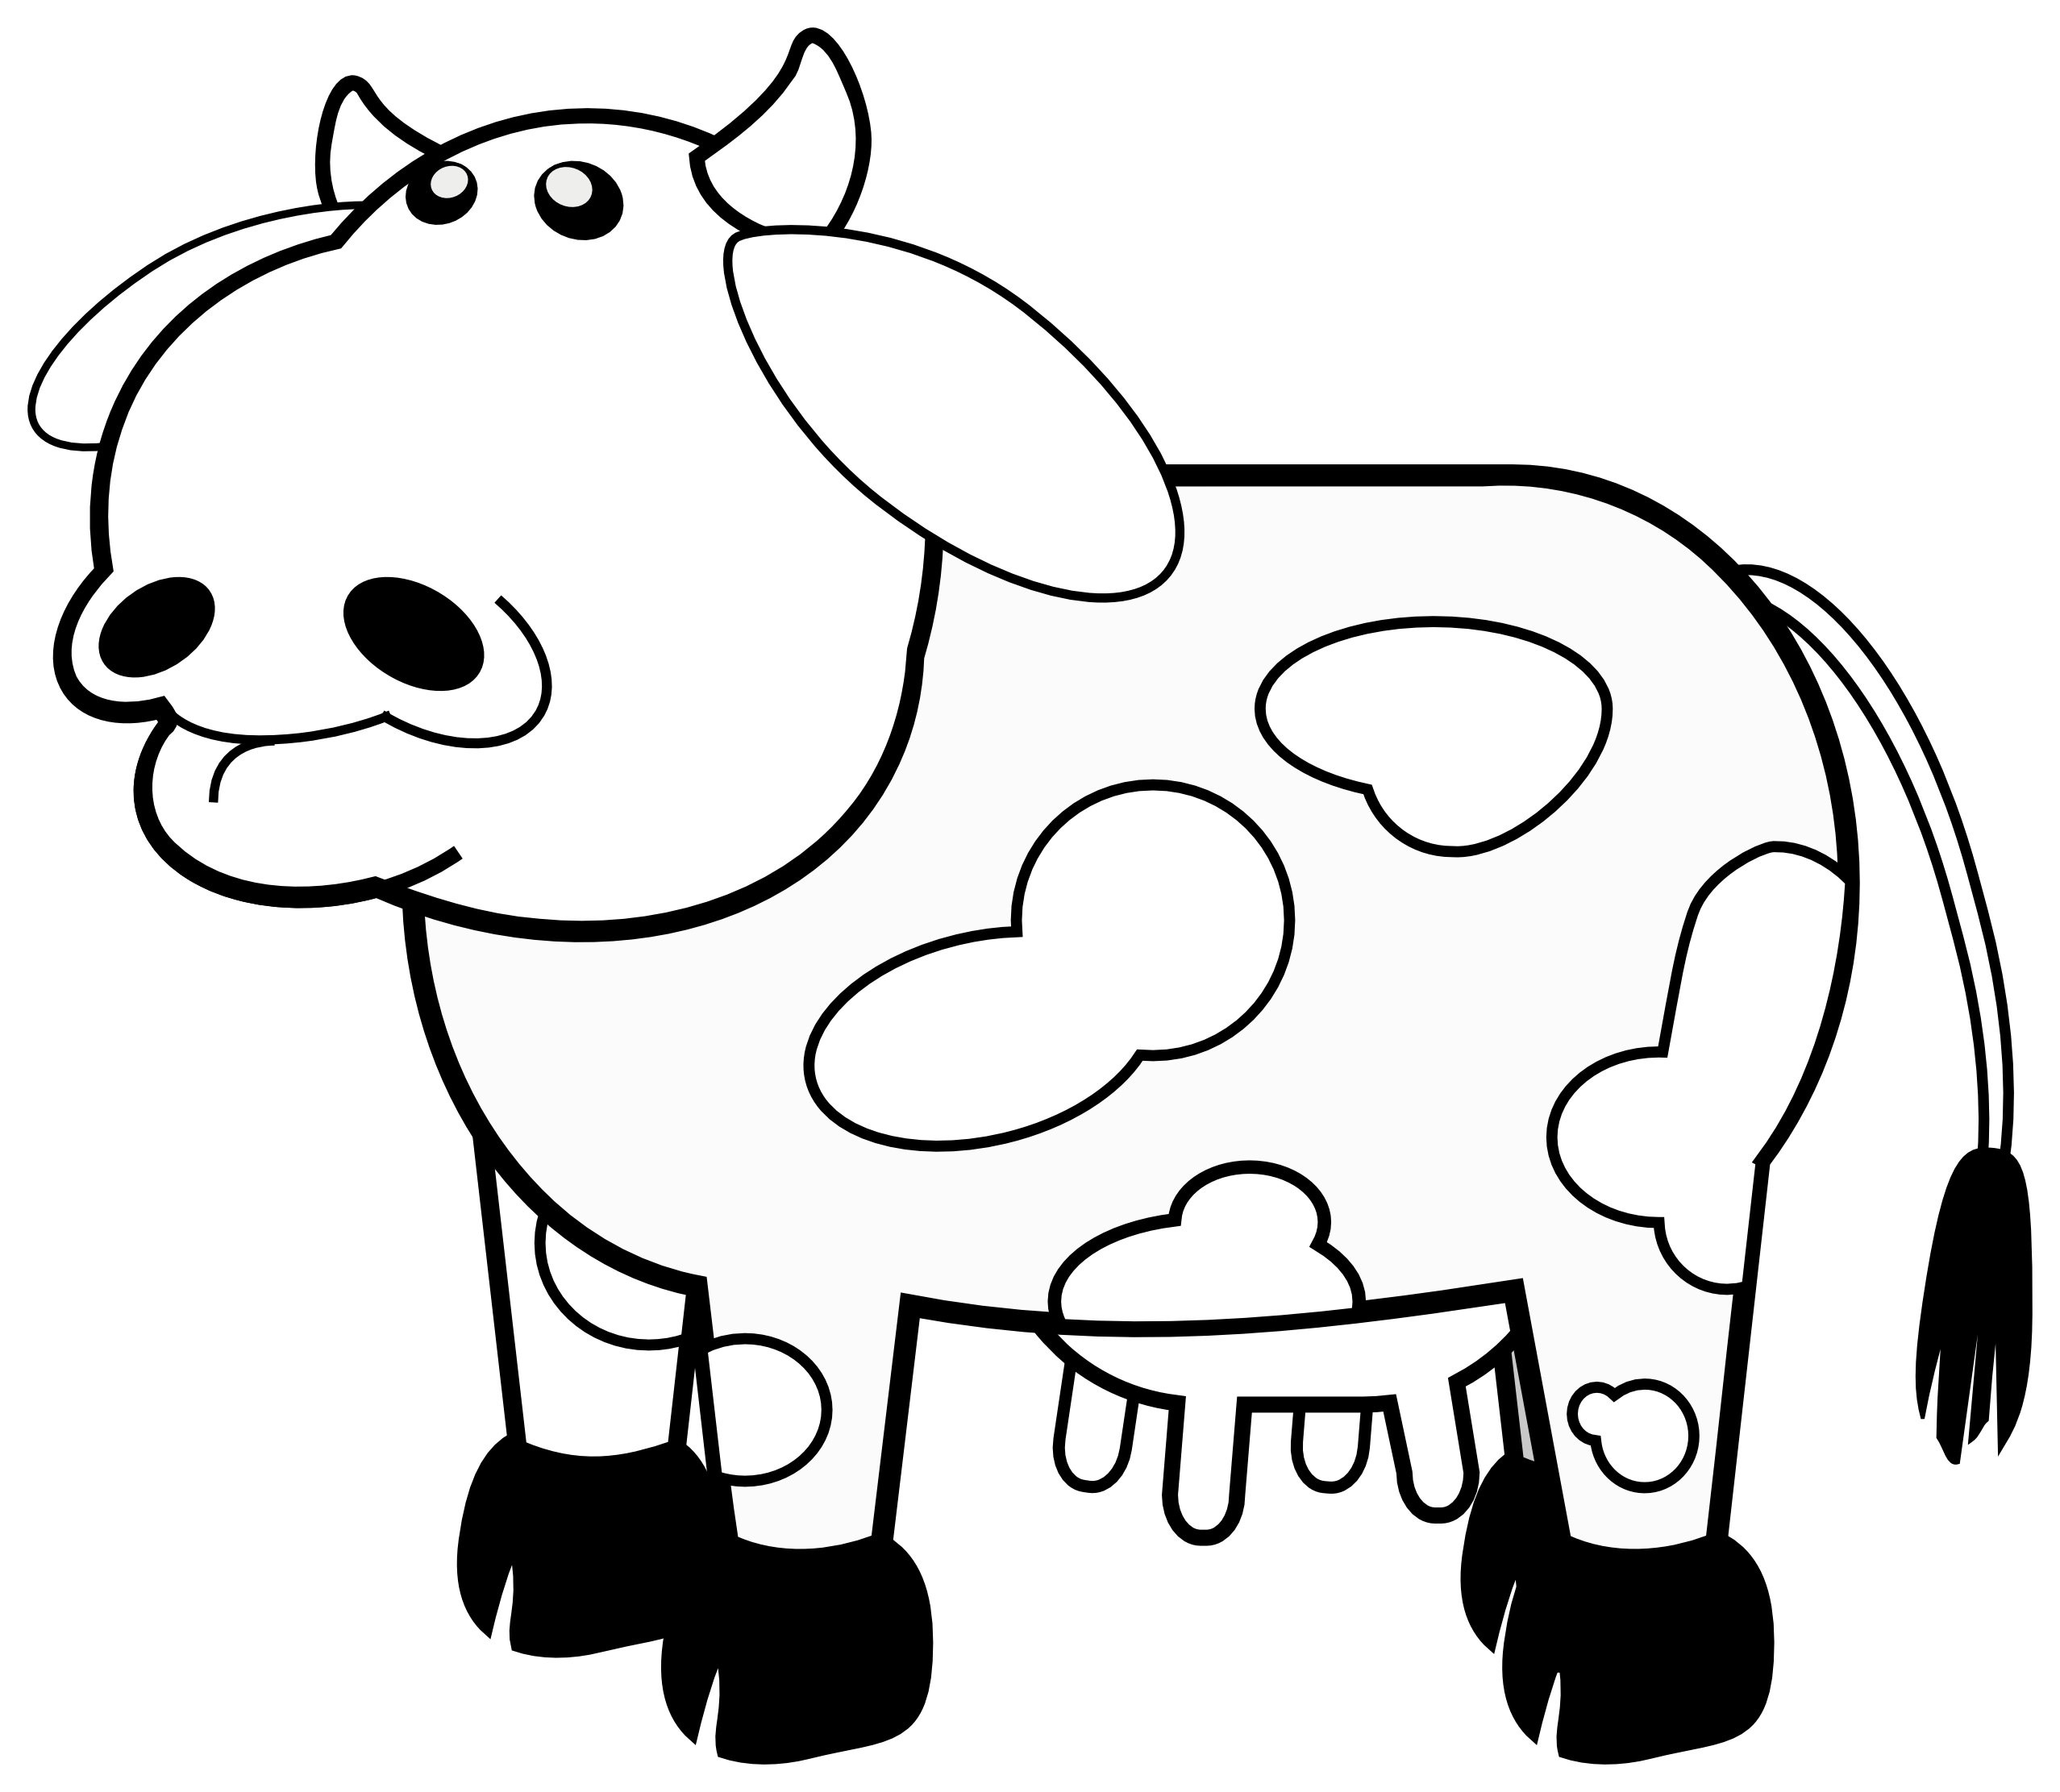 Colour Cows 1 Black White Line Art SVG Inkscape Adobe Illustrator ...